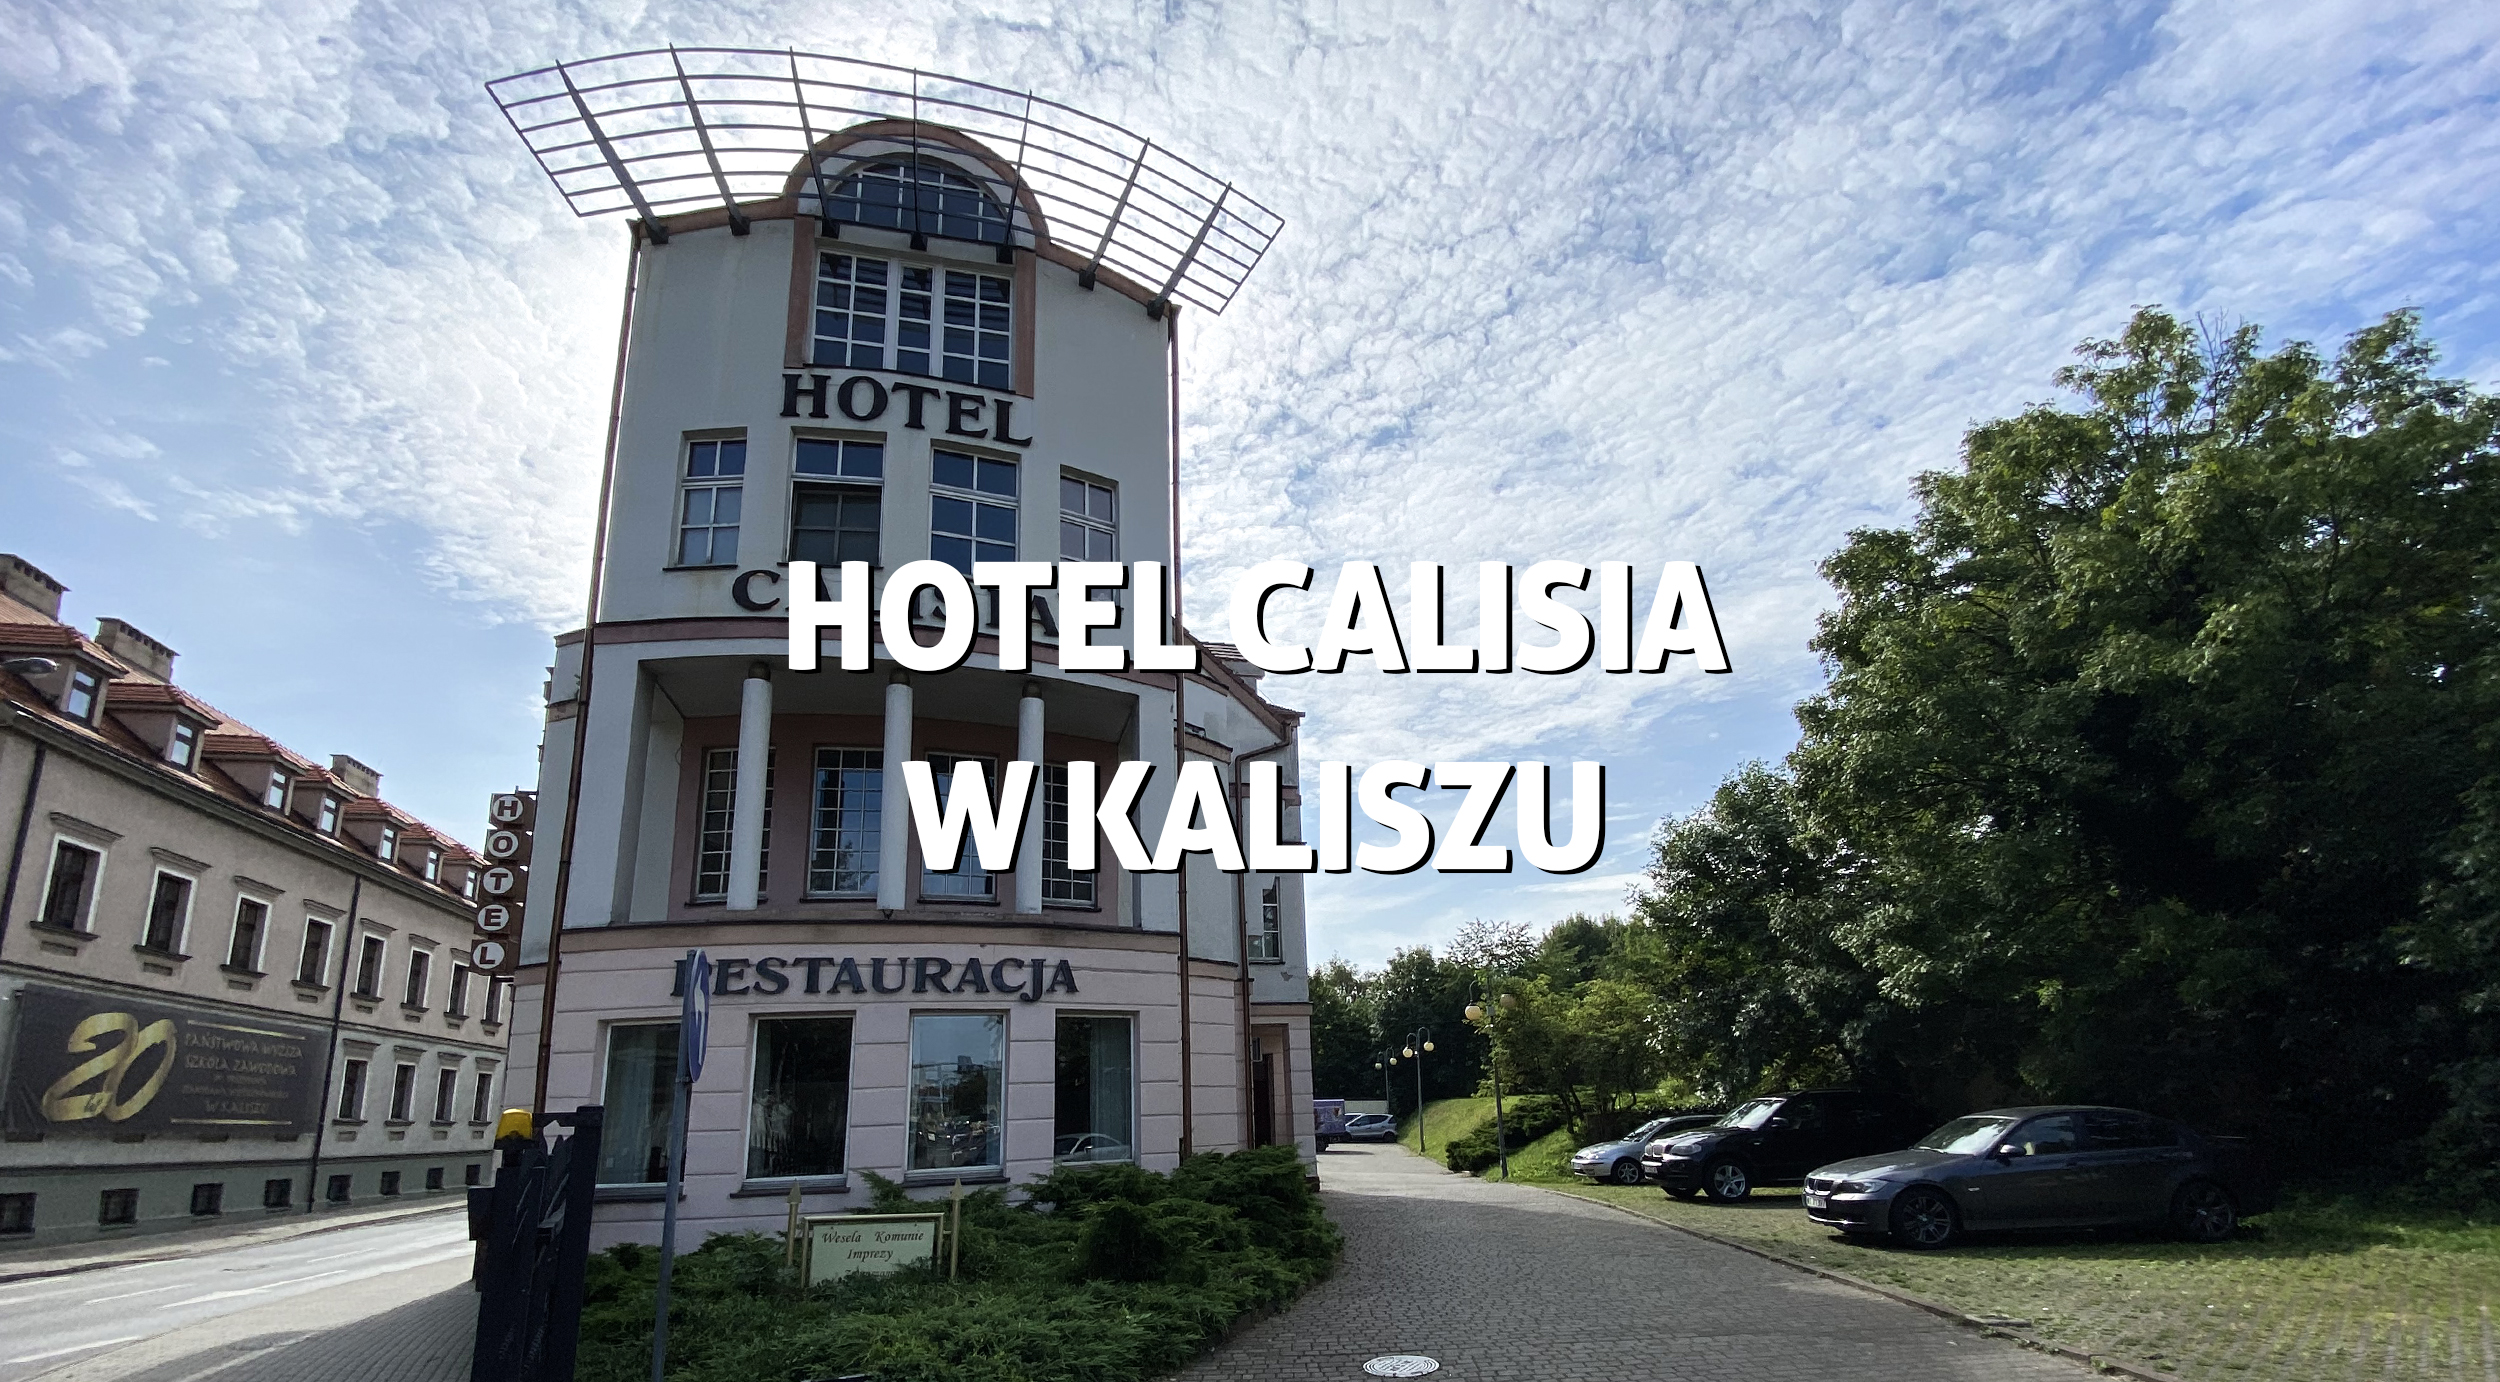 Hotel Calisia w Kaliszu